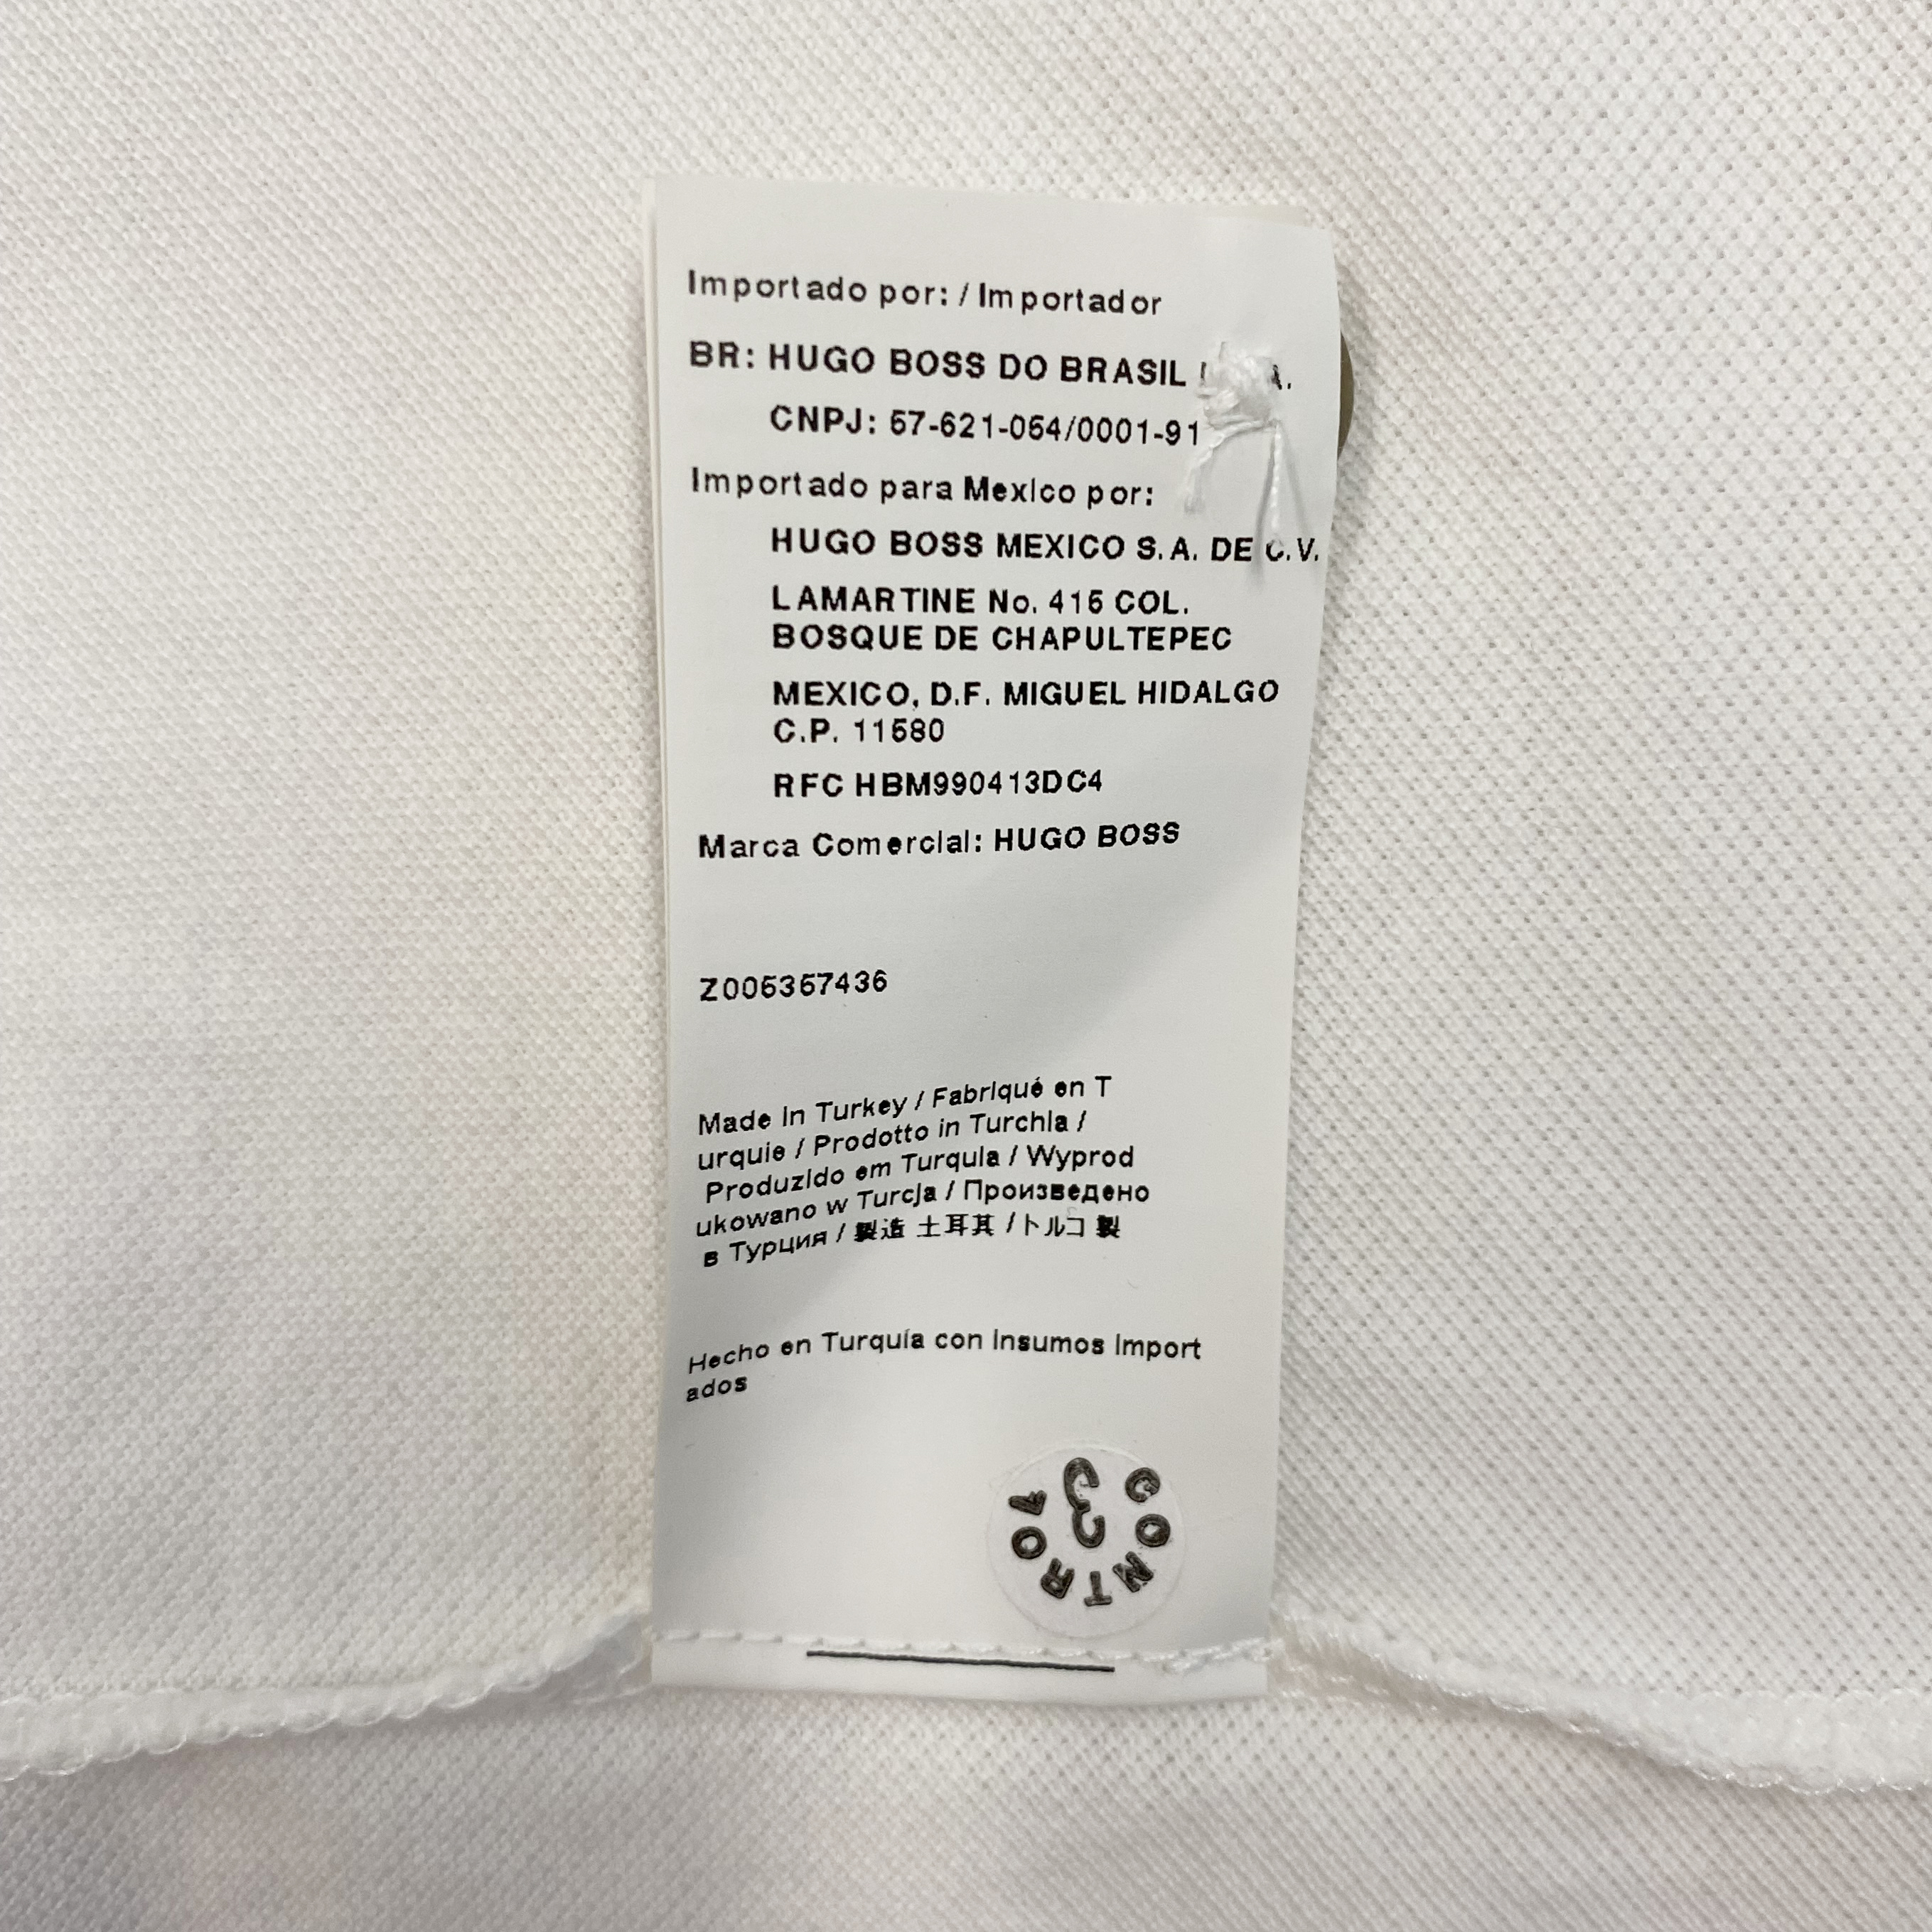 Hugo Boss Cotton Polo T-shirt - White/Taupe/Grey